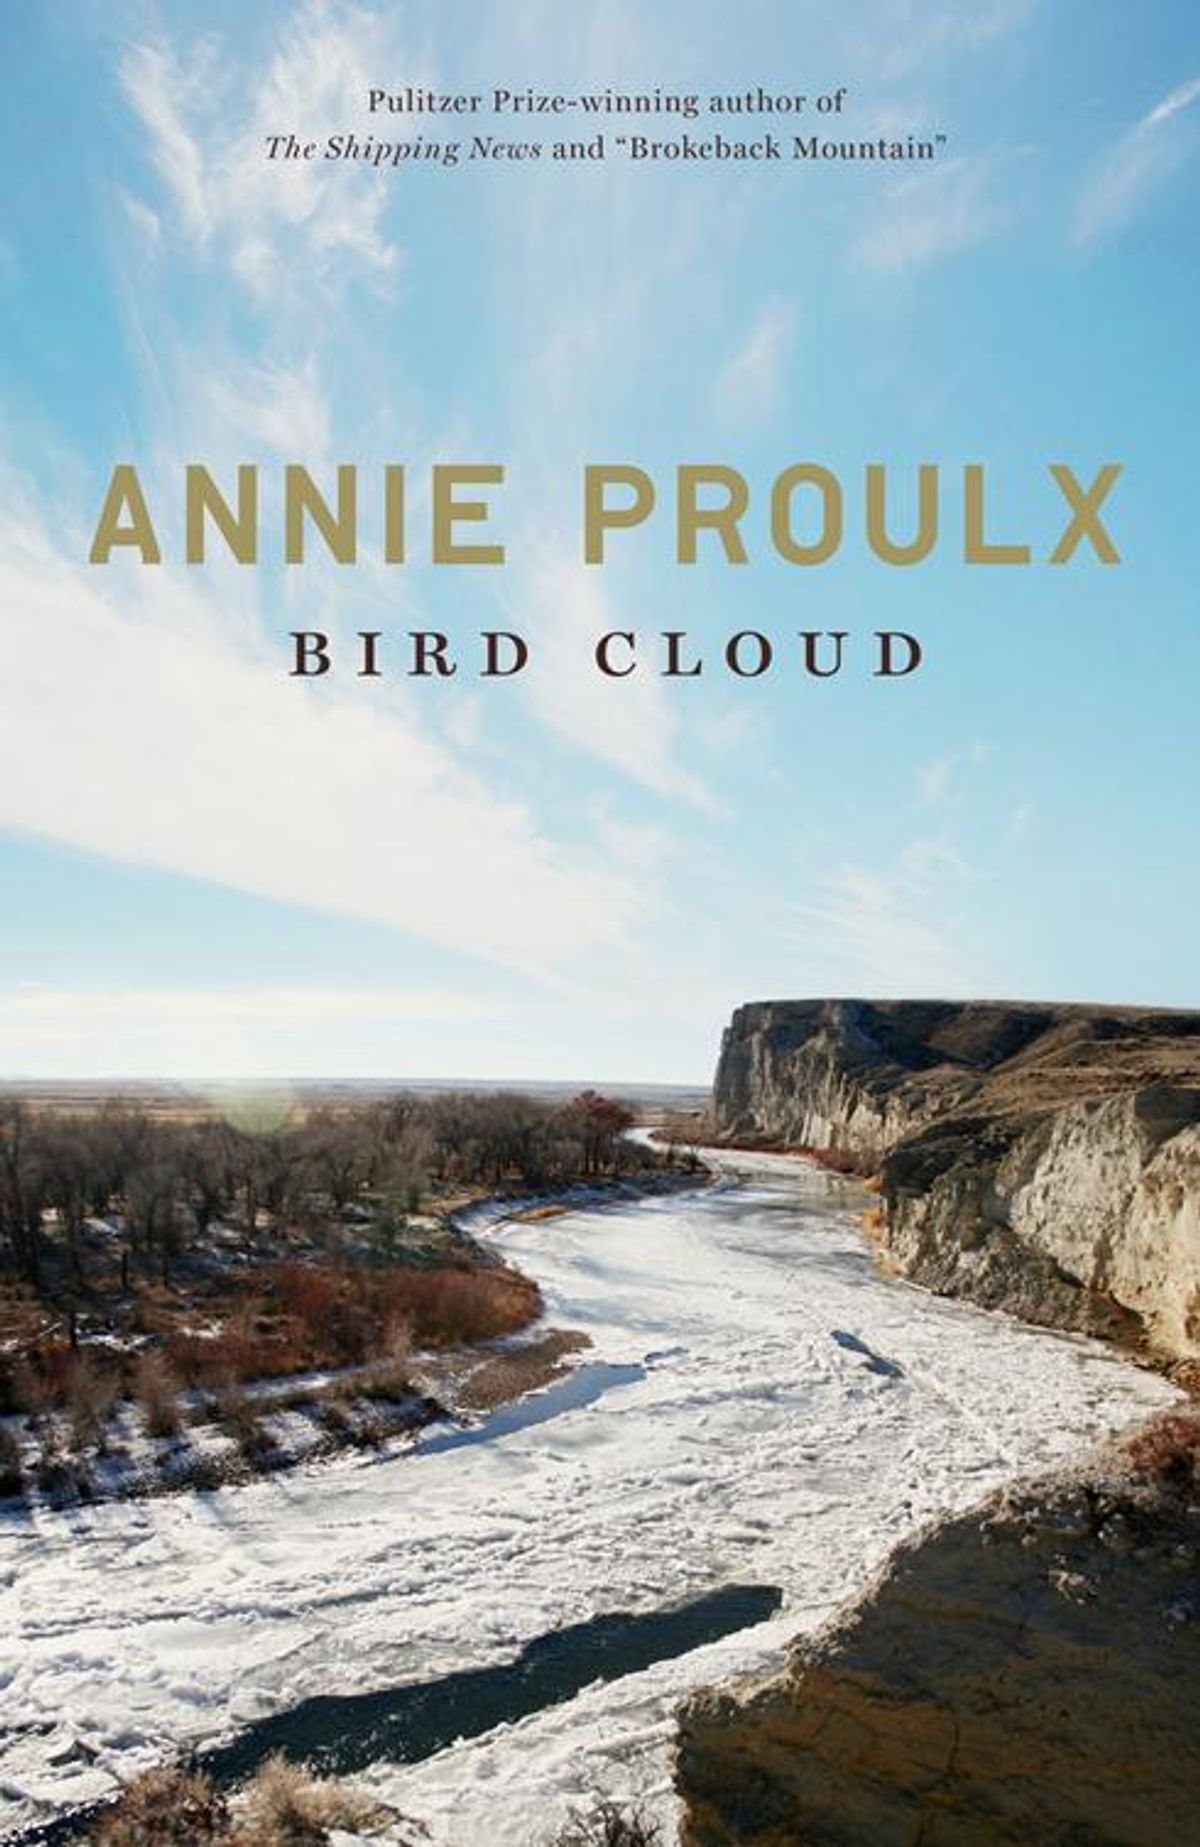 "Bird Cloud" by Annie Proulx